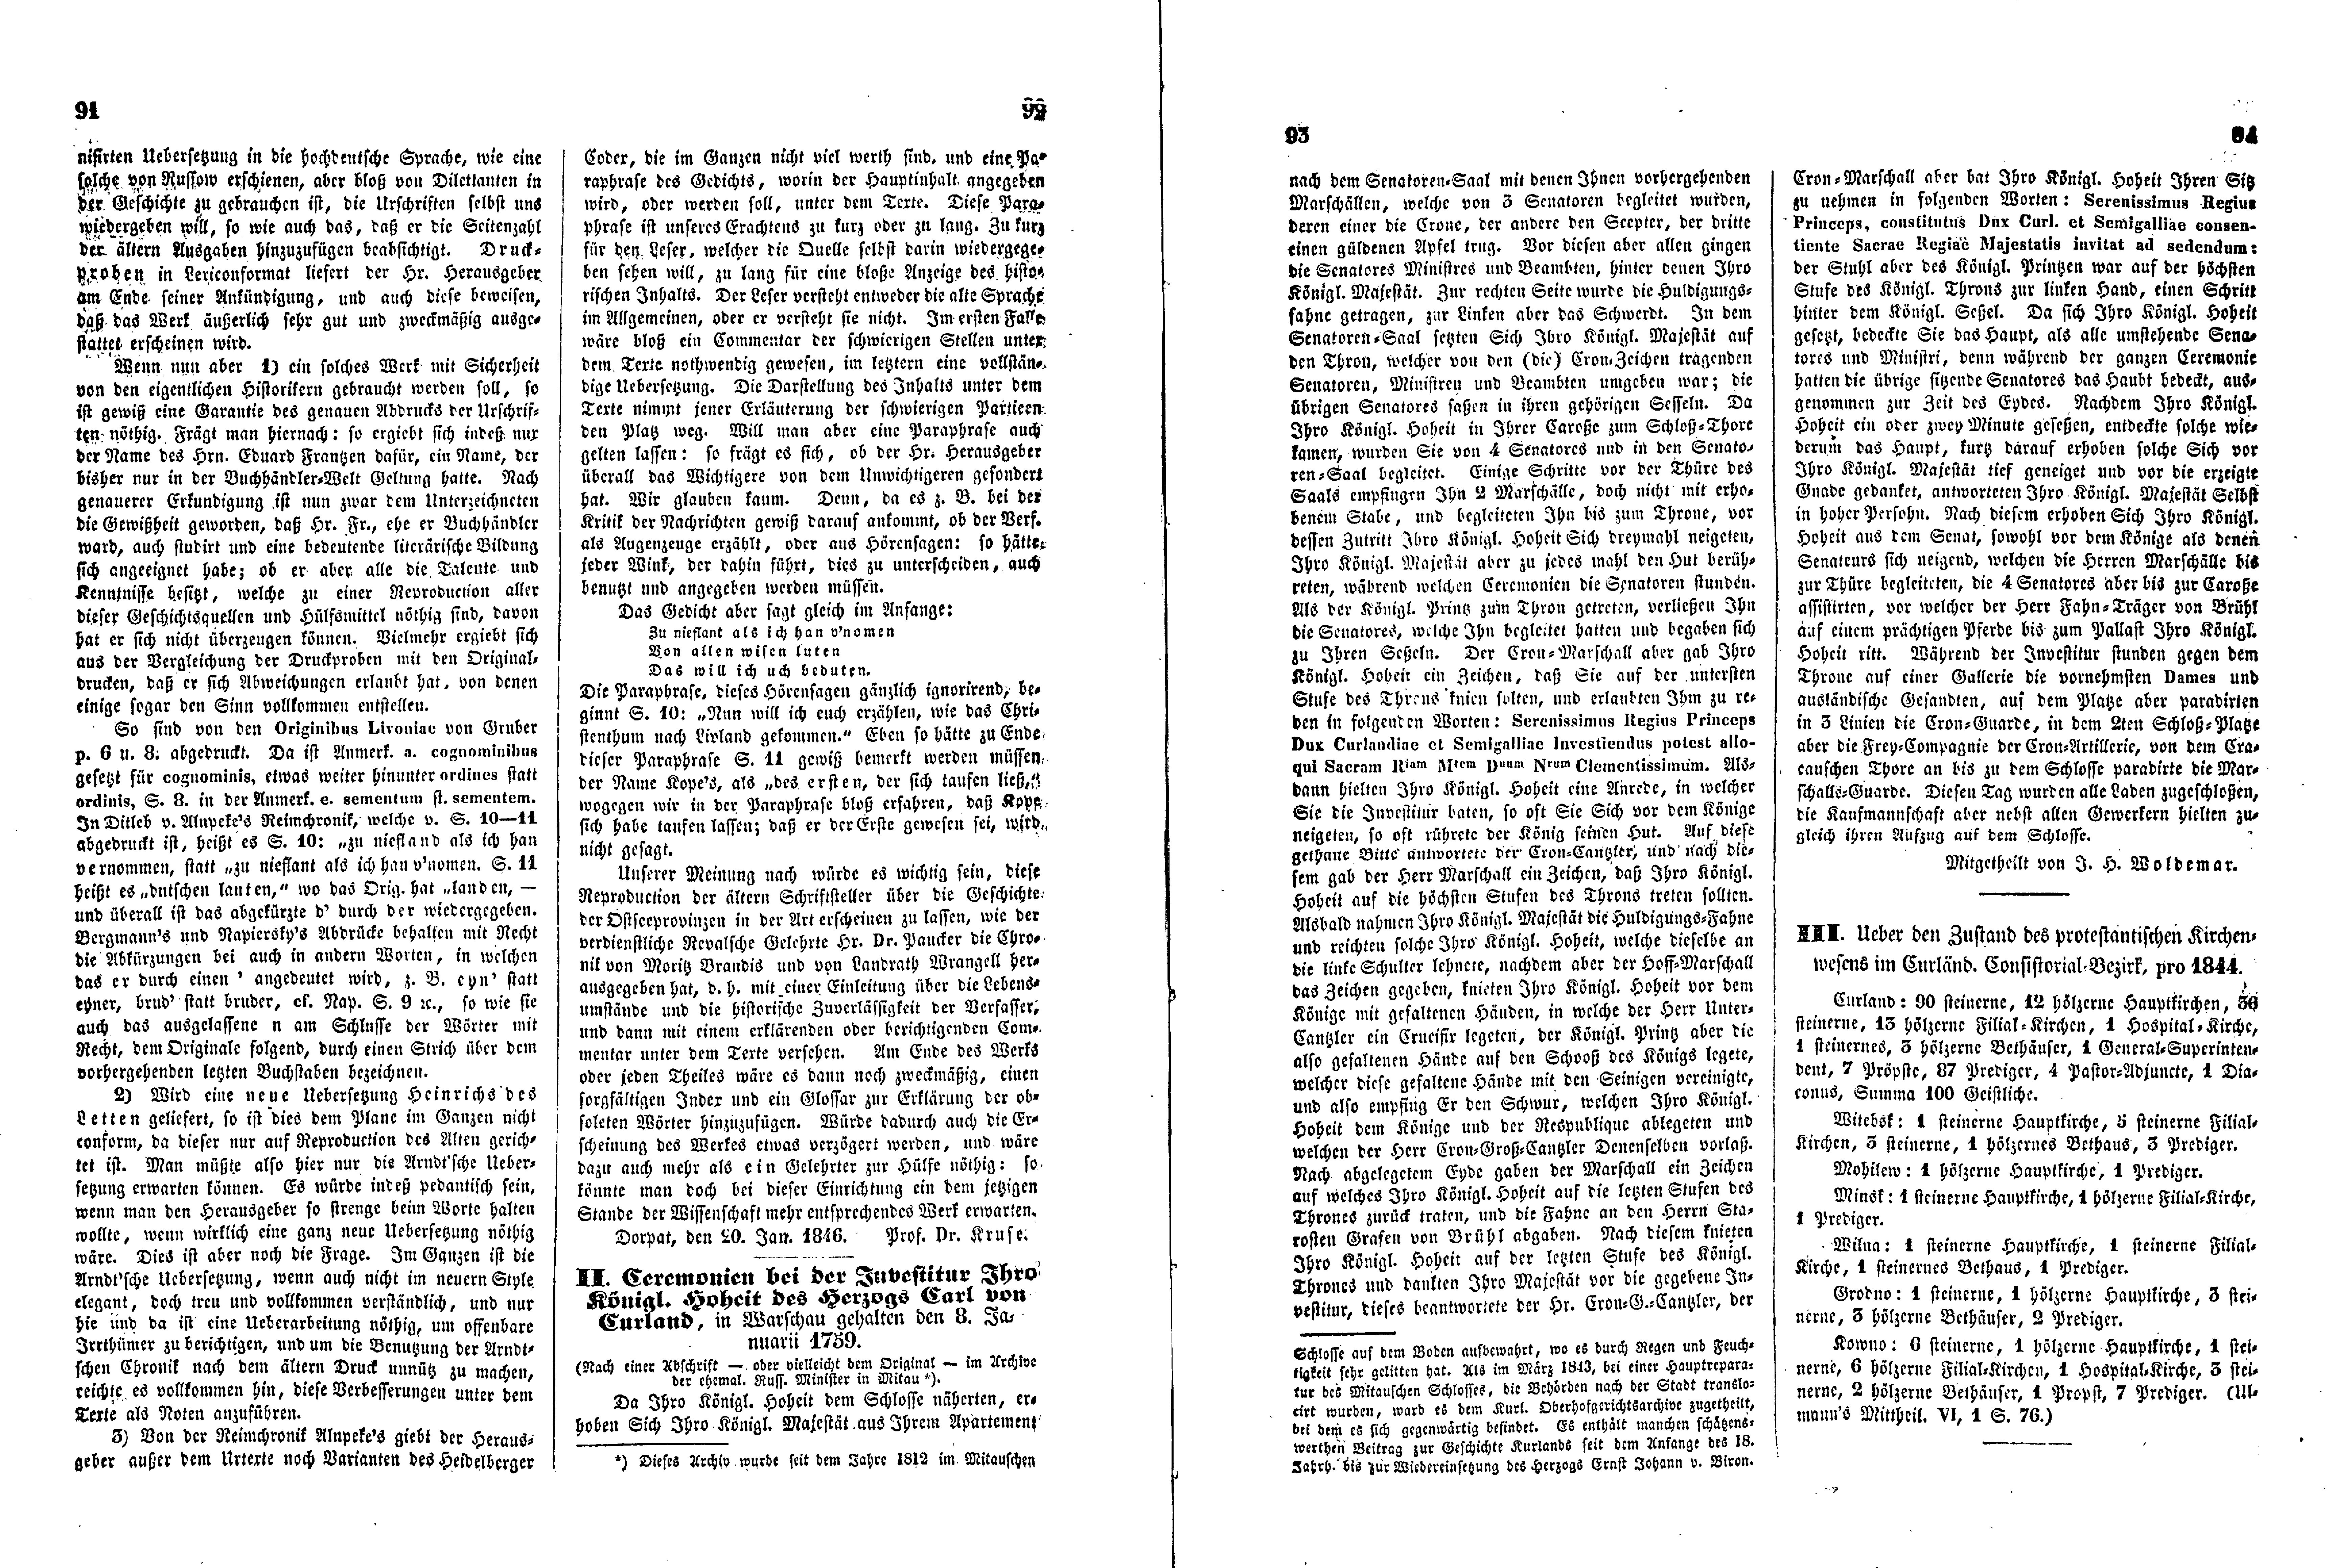 Das Inland [11] (1846) | 28. (91-94) Main body of text